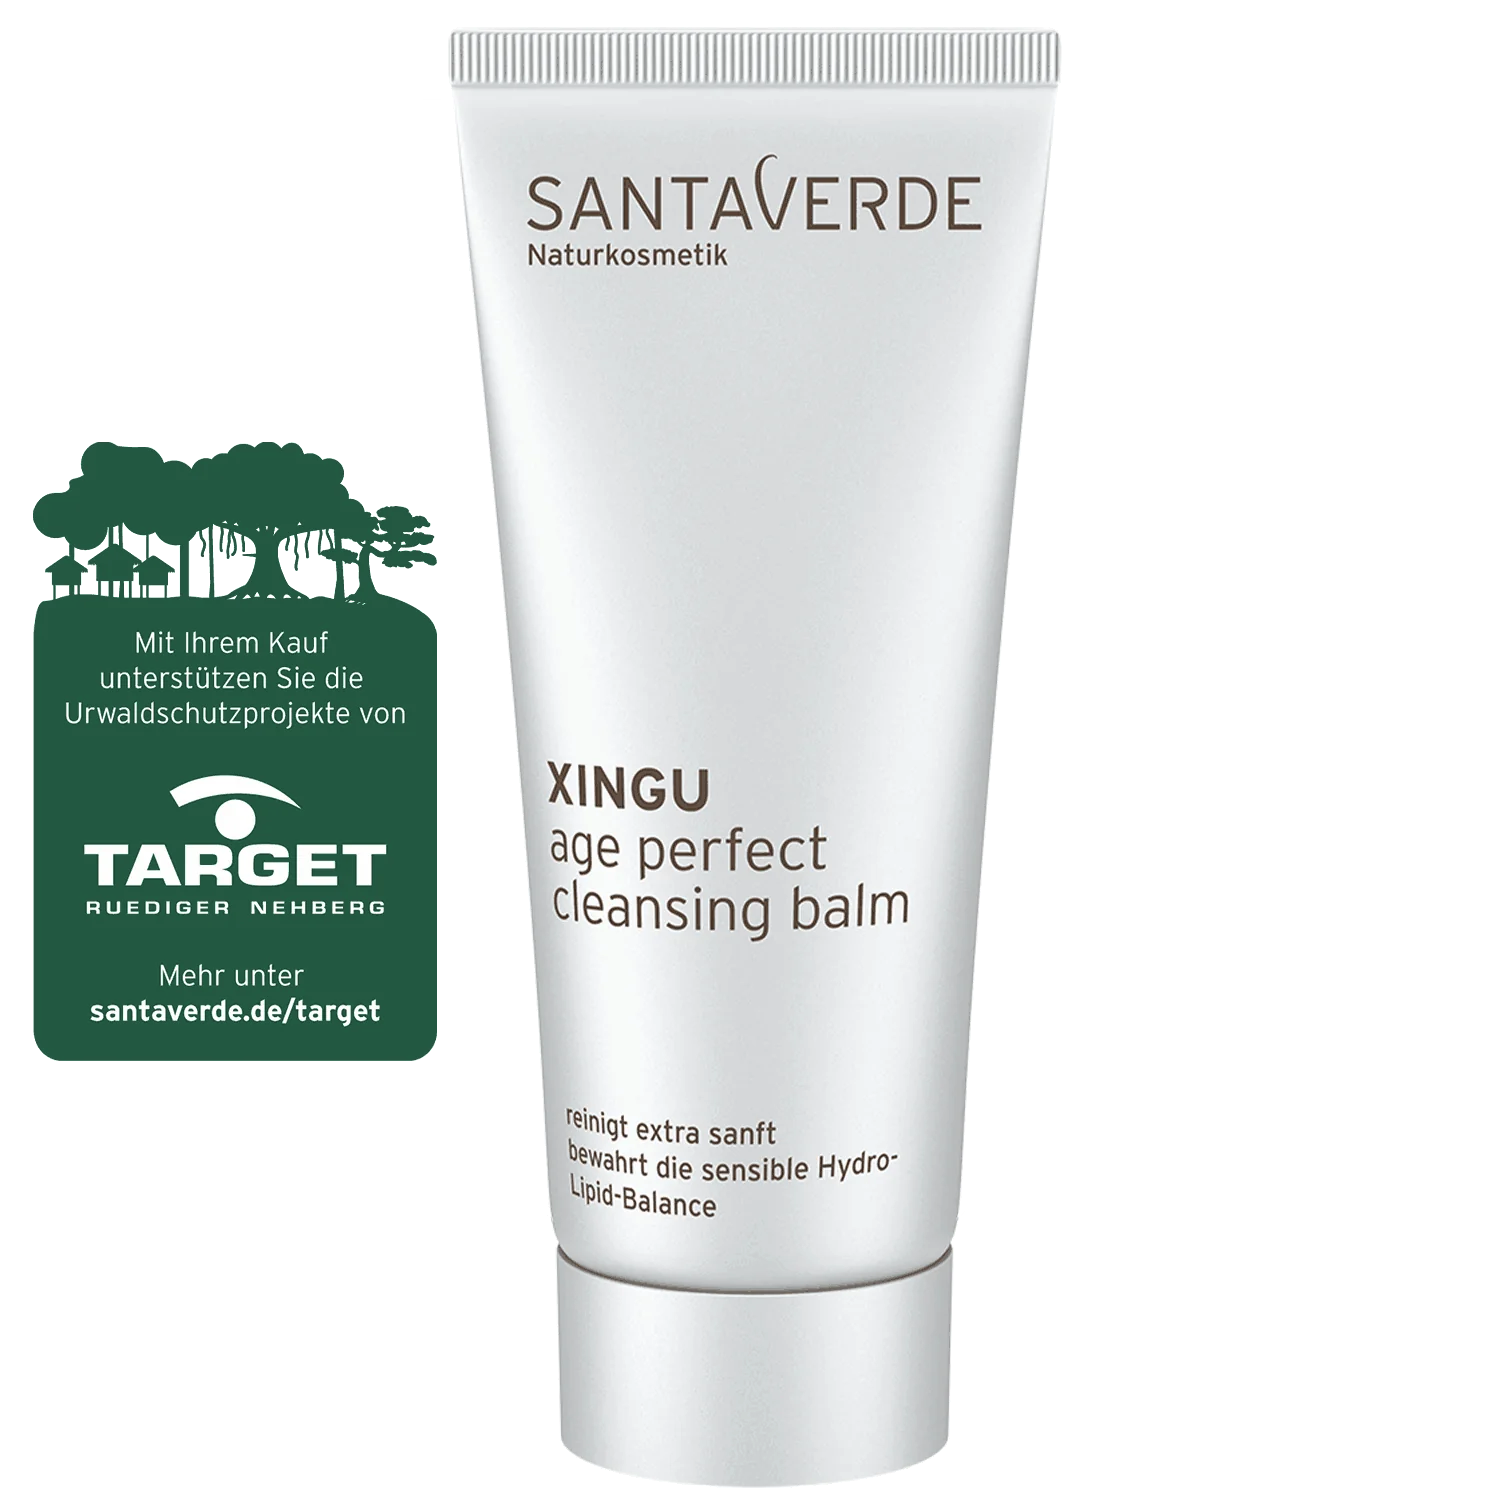 Santaverde XINGU age perfect cleansing balm | 100ml